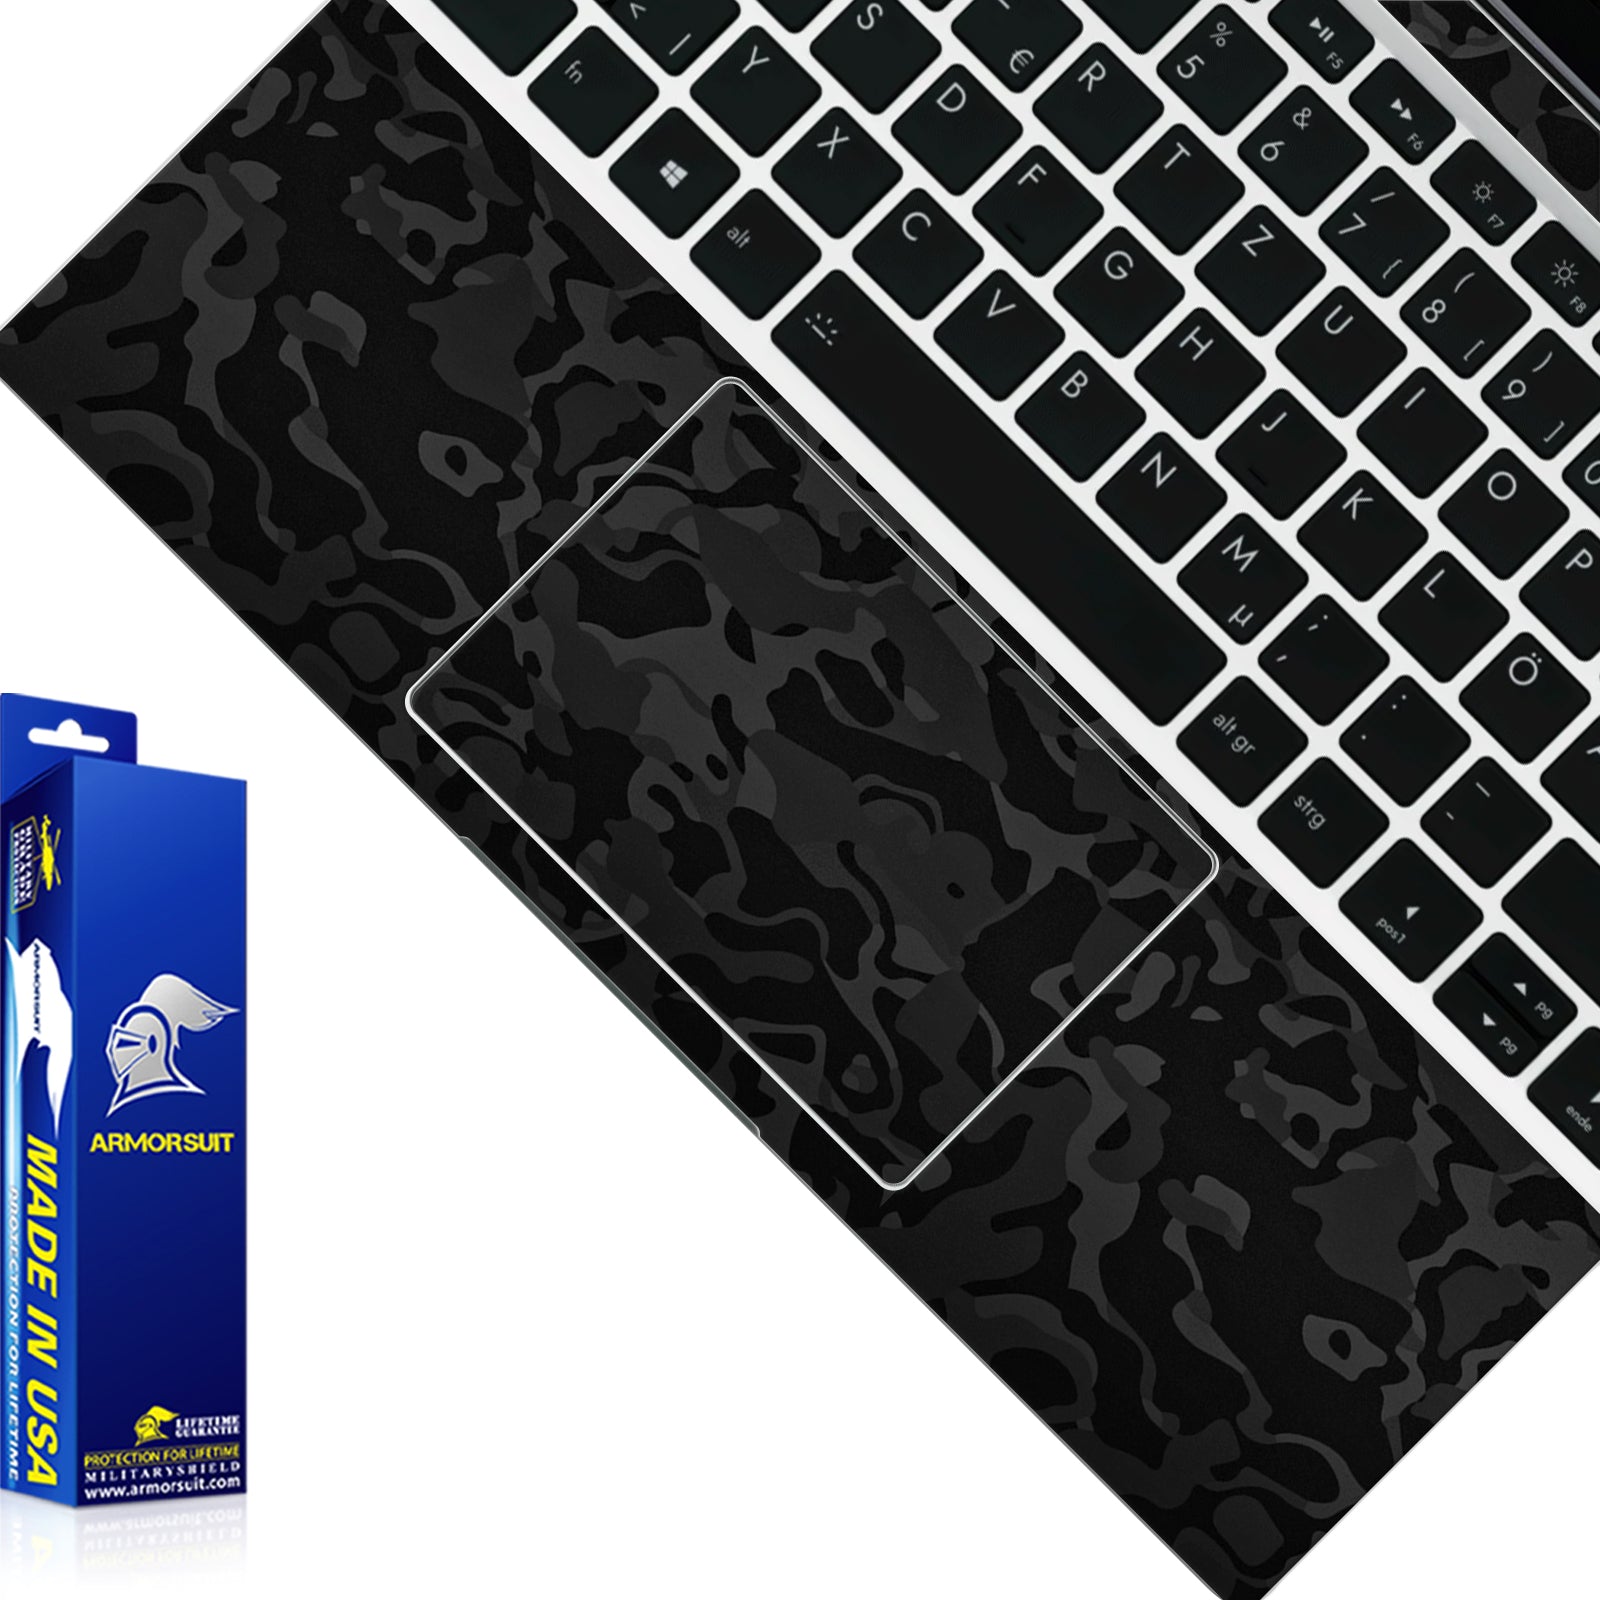 Batman Laptop Skin Cover  Make Your Own – BREACHIT